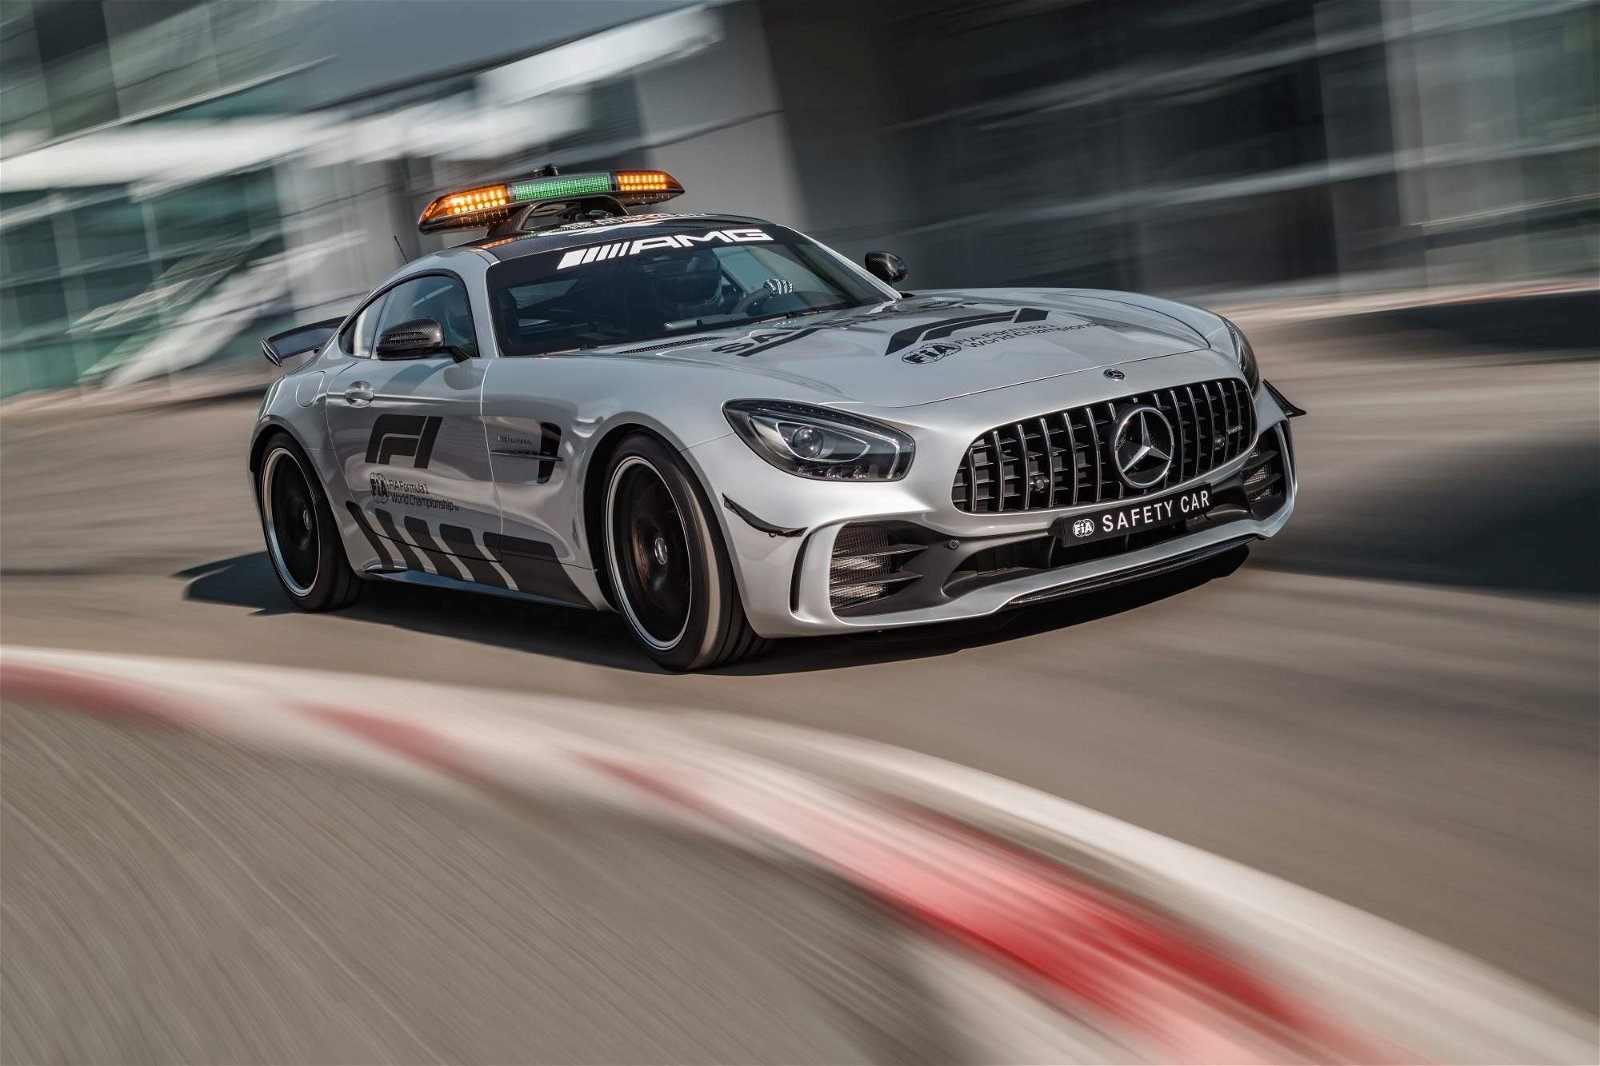 Mercedes-AMG-GT-R-Official-F1-Safety-Car-2018-1